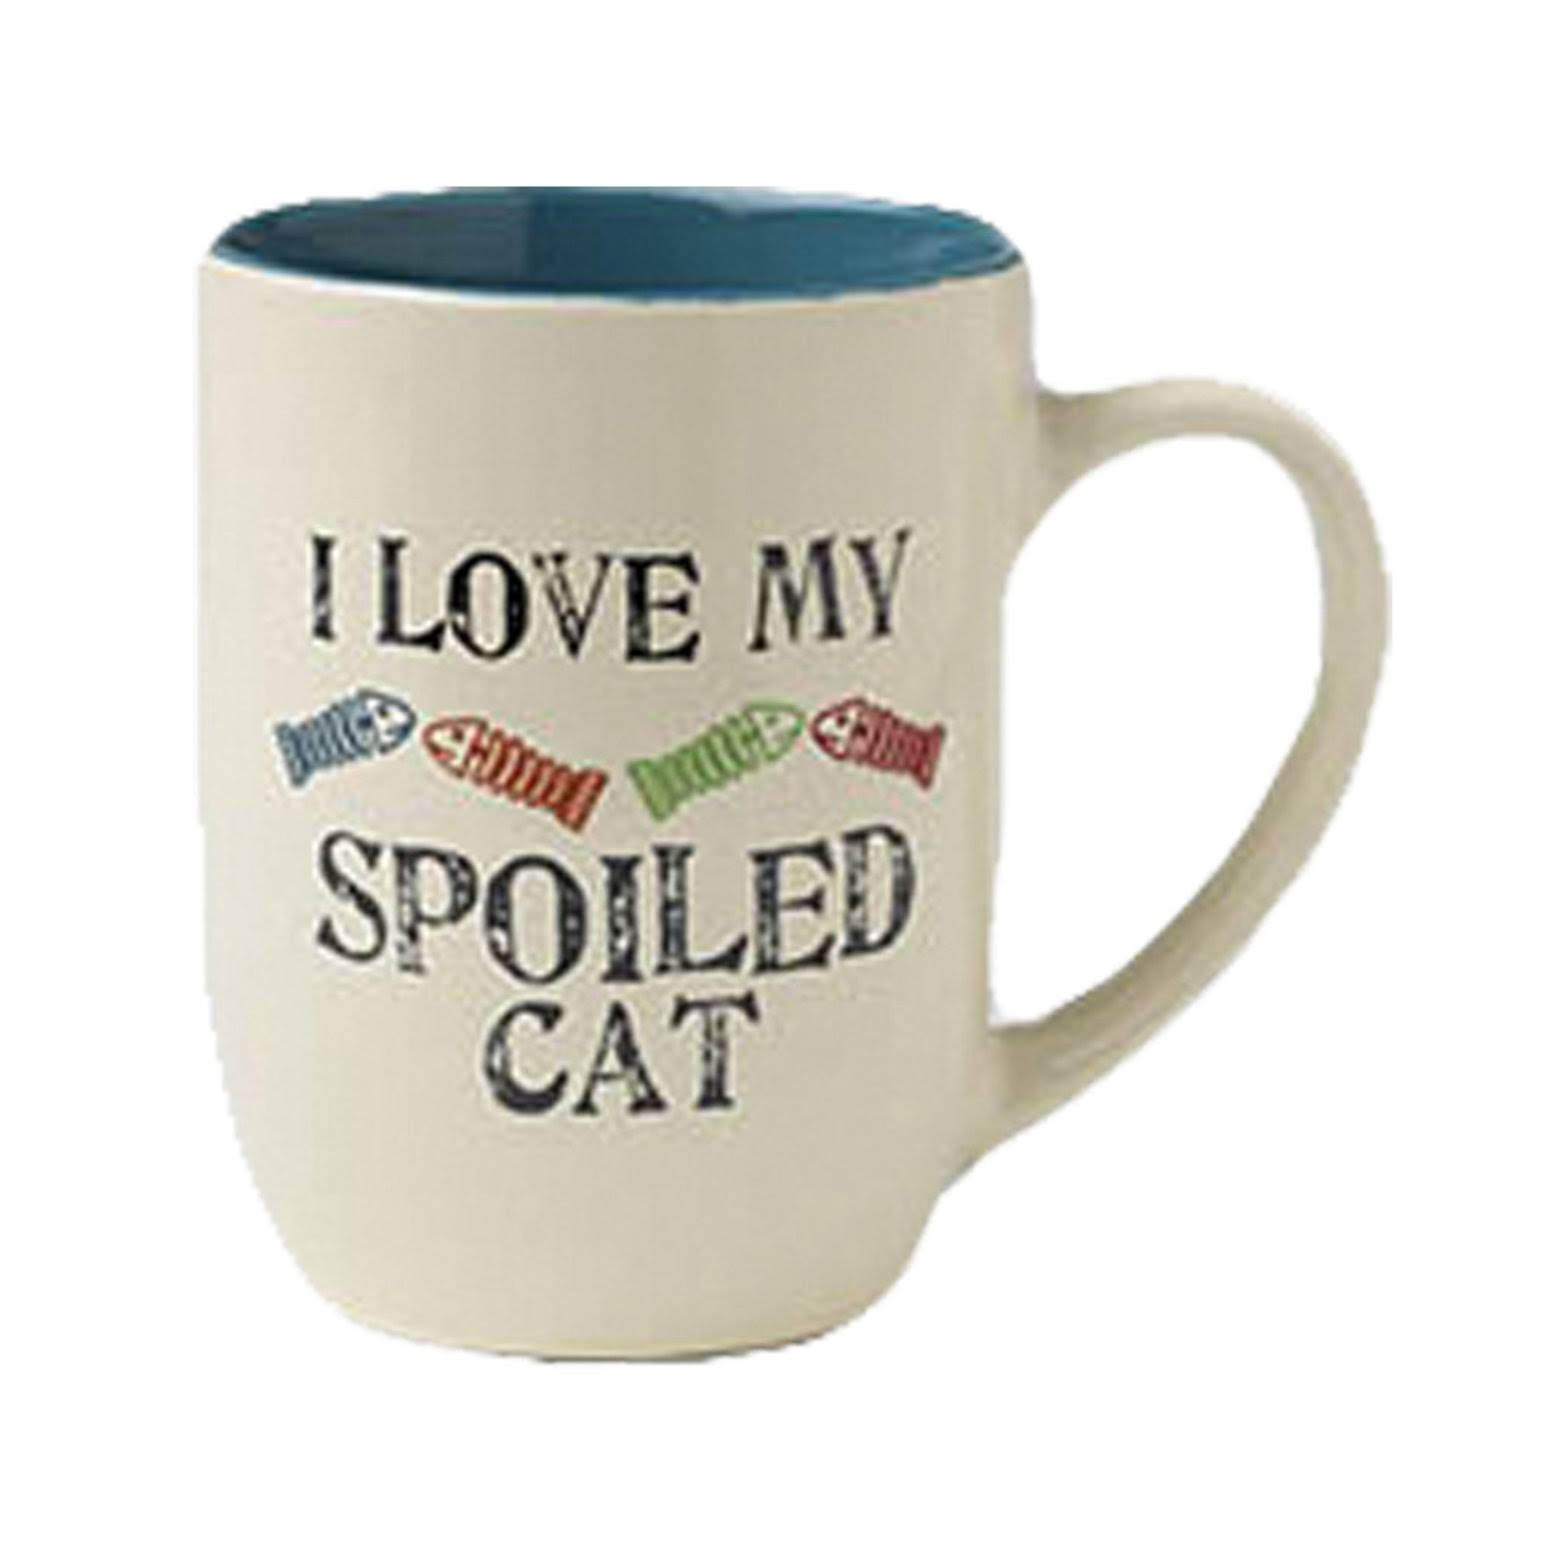 Petrageous One Spoiled Cat Mug 24oz